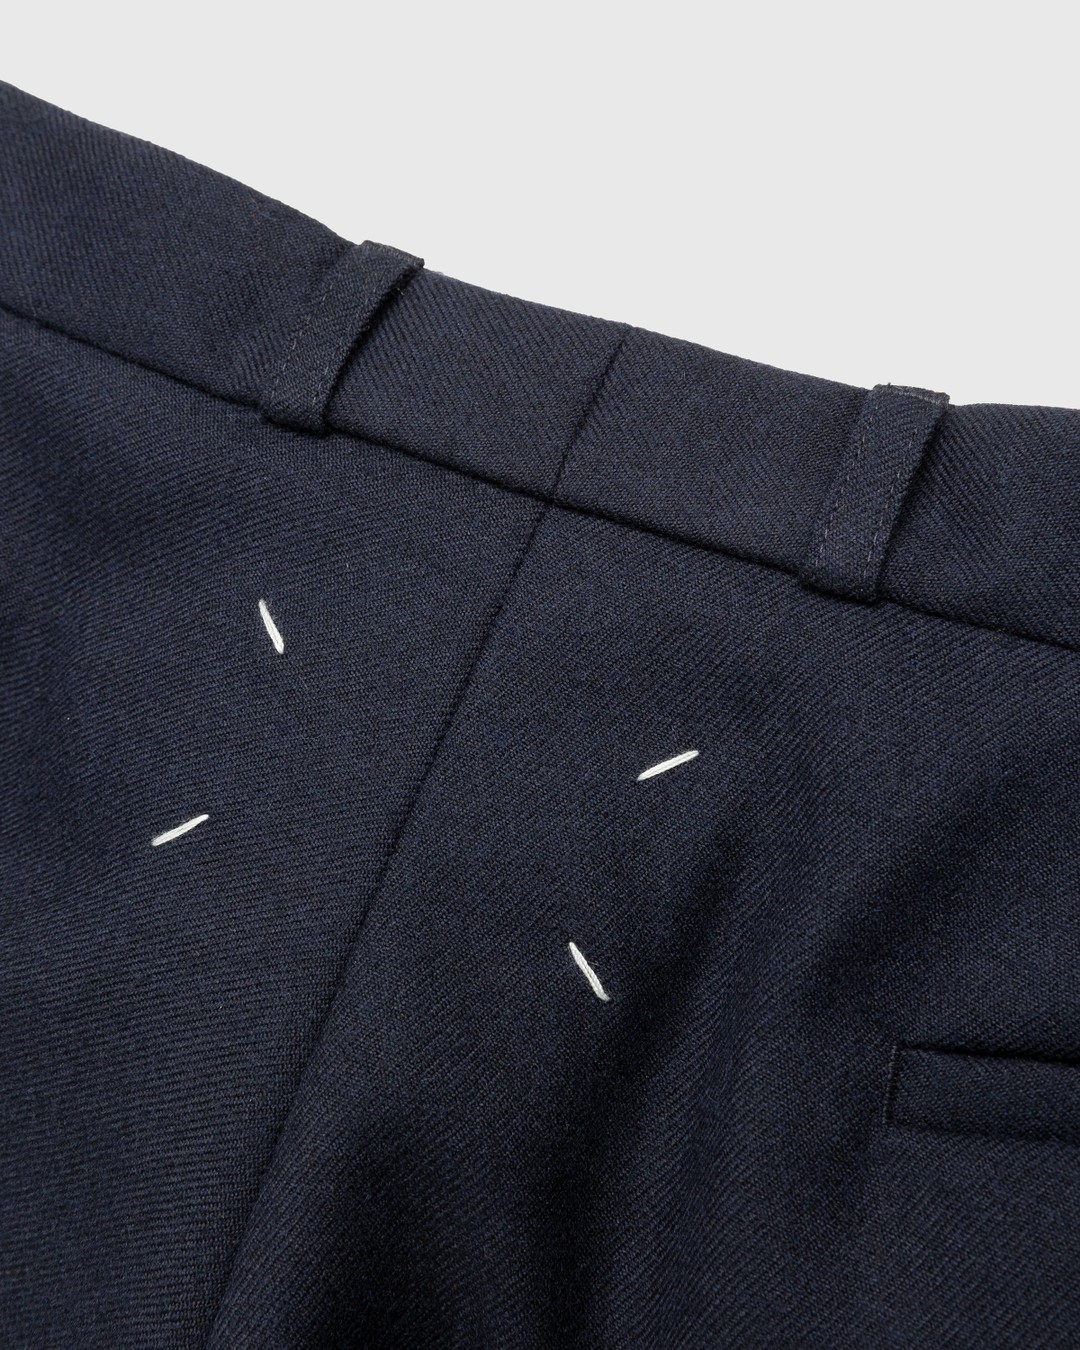 Maison Margiela – Wool Twill Trousers Navy - Pants - Blue - Image 6